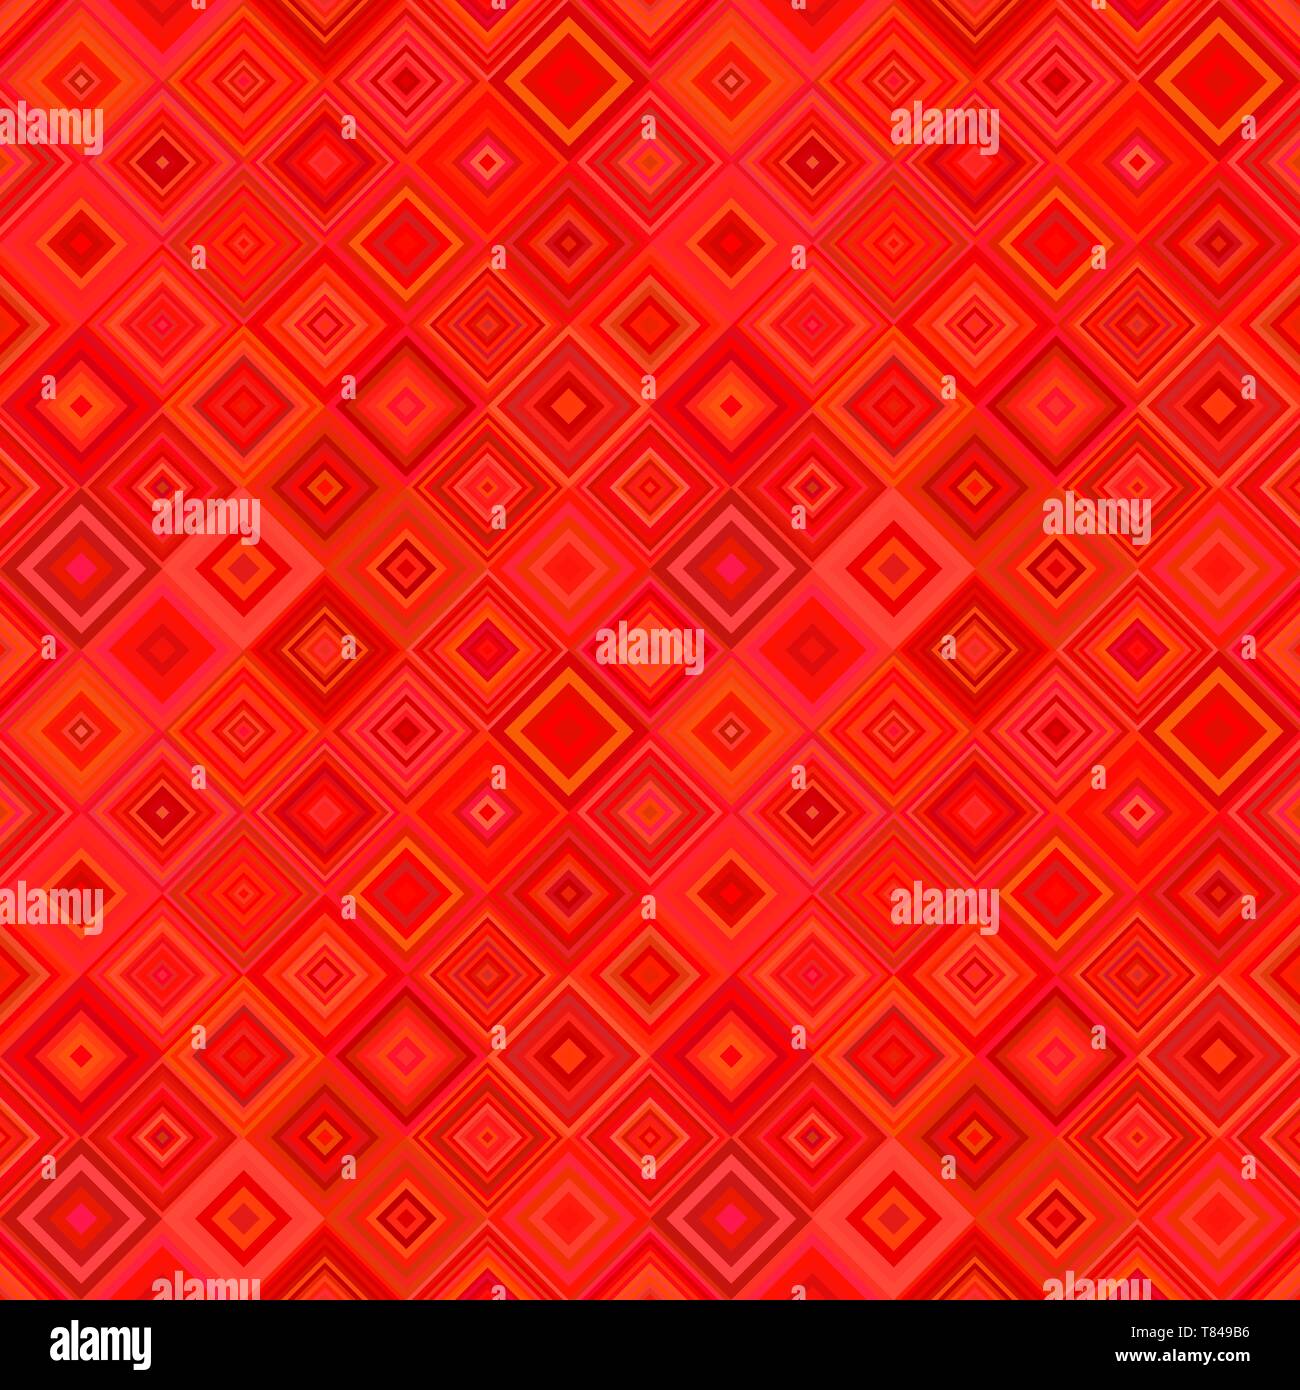 Geometric diagonal square pattern background - seamless design Stock Vector